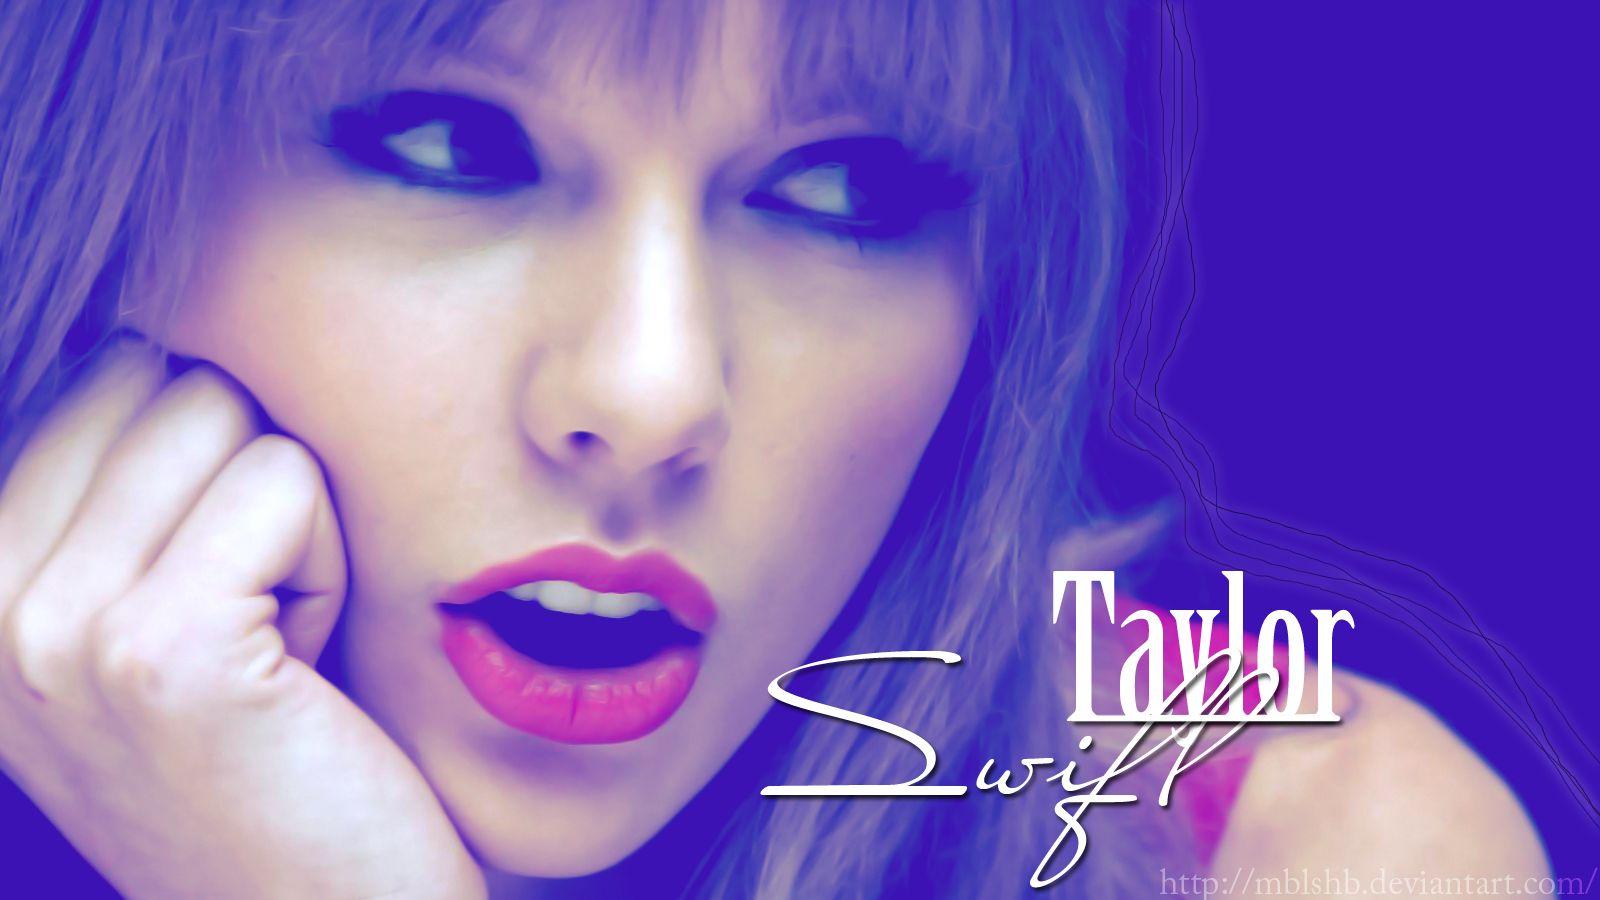 Taylor Swift Background. Taylor swift wallpaper, Taylor swift